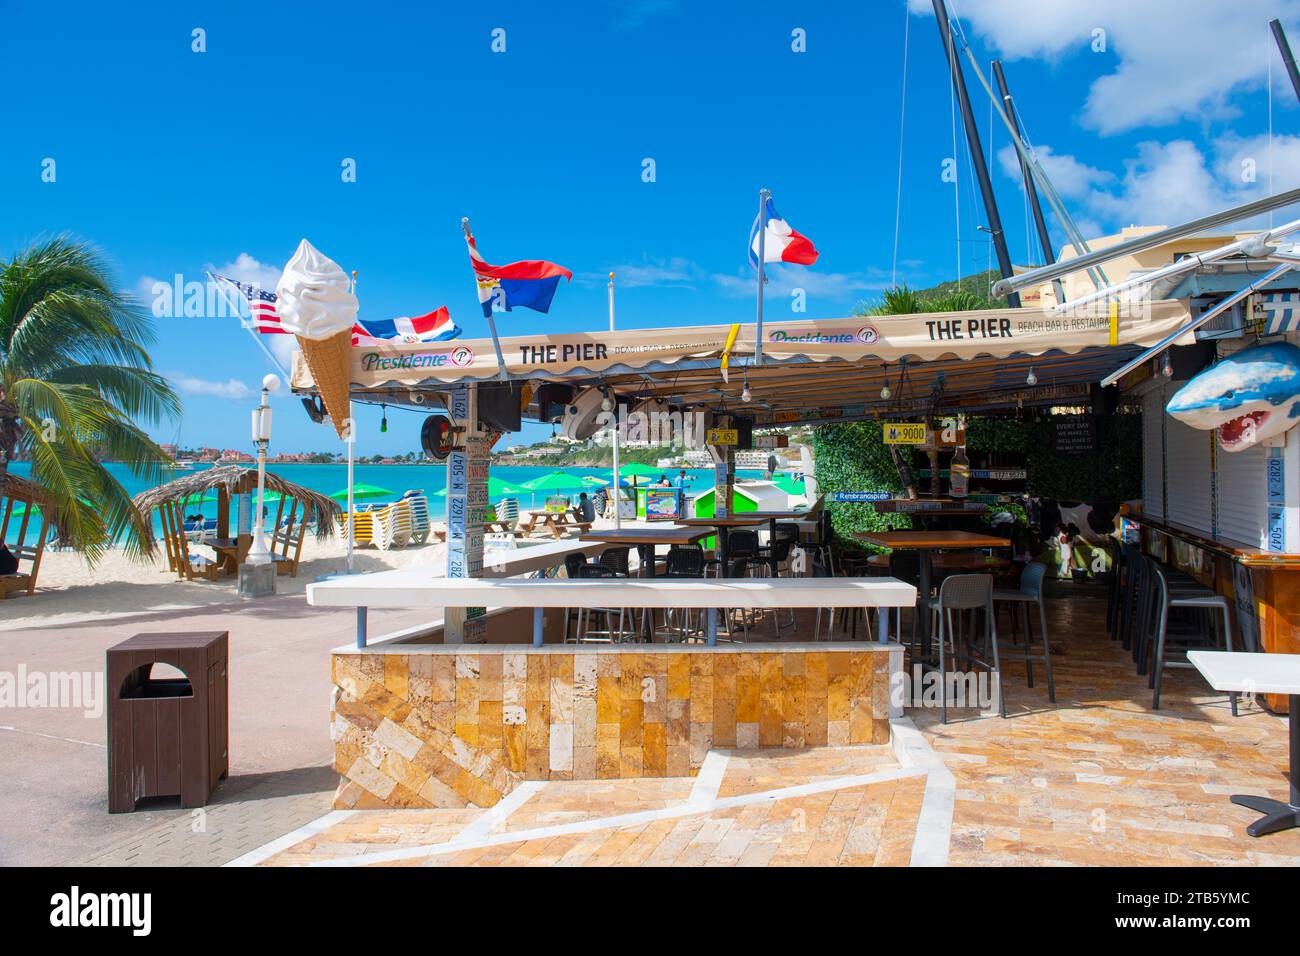 The Pier beach bar and restaurant on Broadwalk at Walter Plantz Wharf in historic center of Philipsburg in Sint Maarten, Dutch Caribbean. Stock Photo